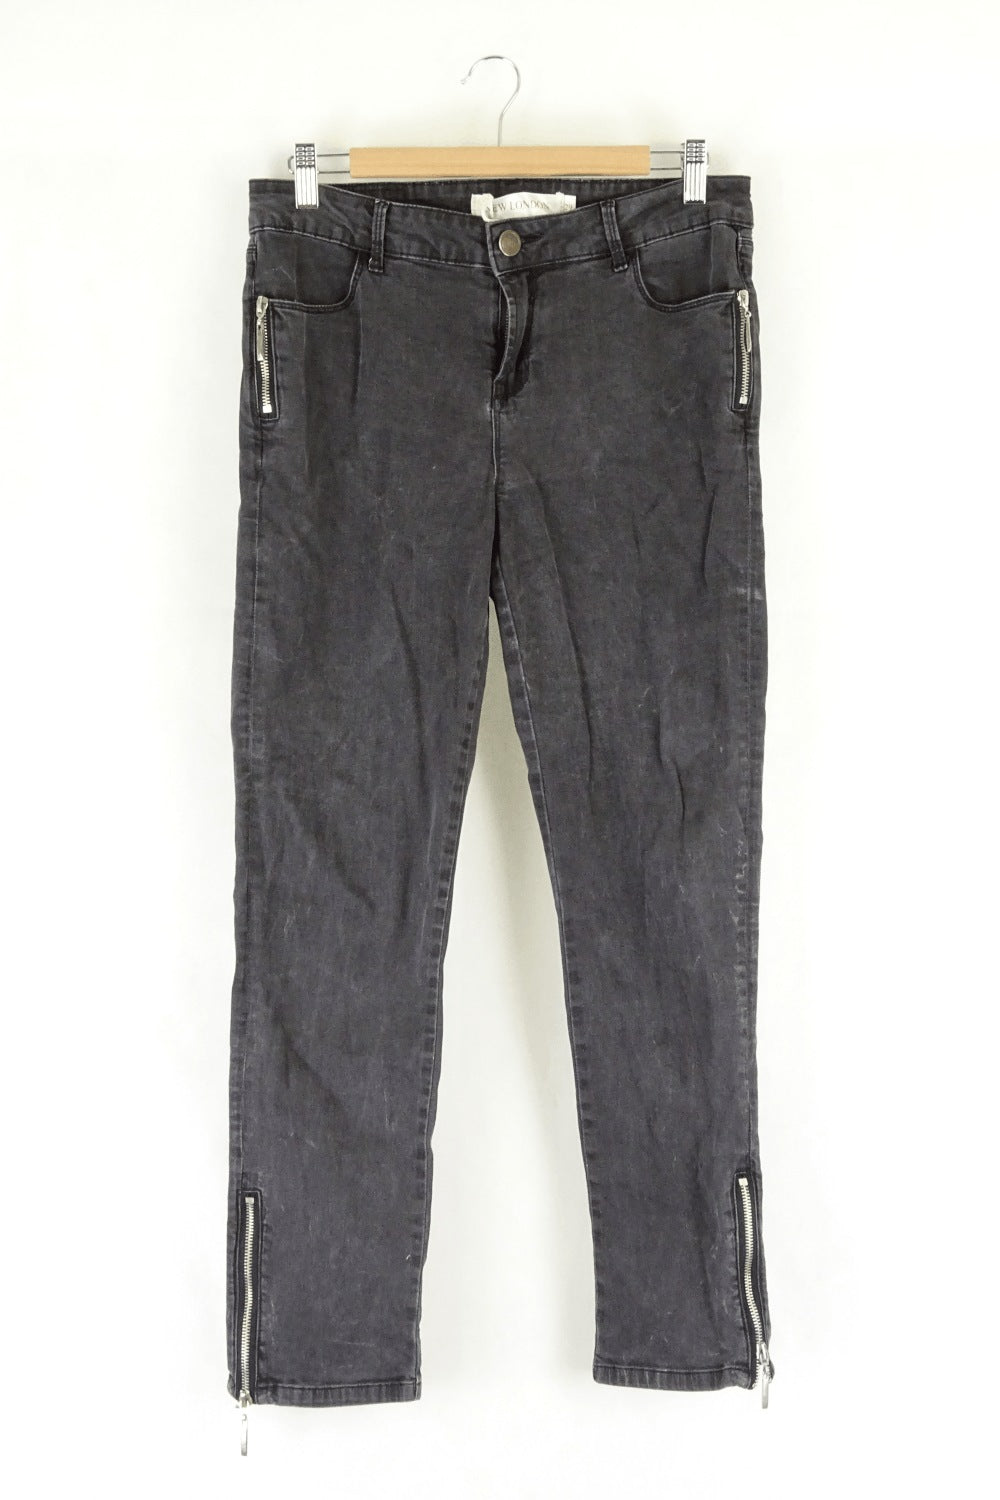 New London Distressed Black Denim Jeans 29 (11AU)